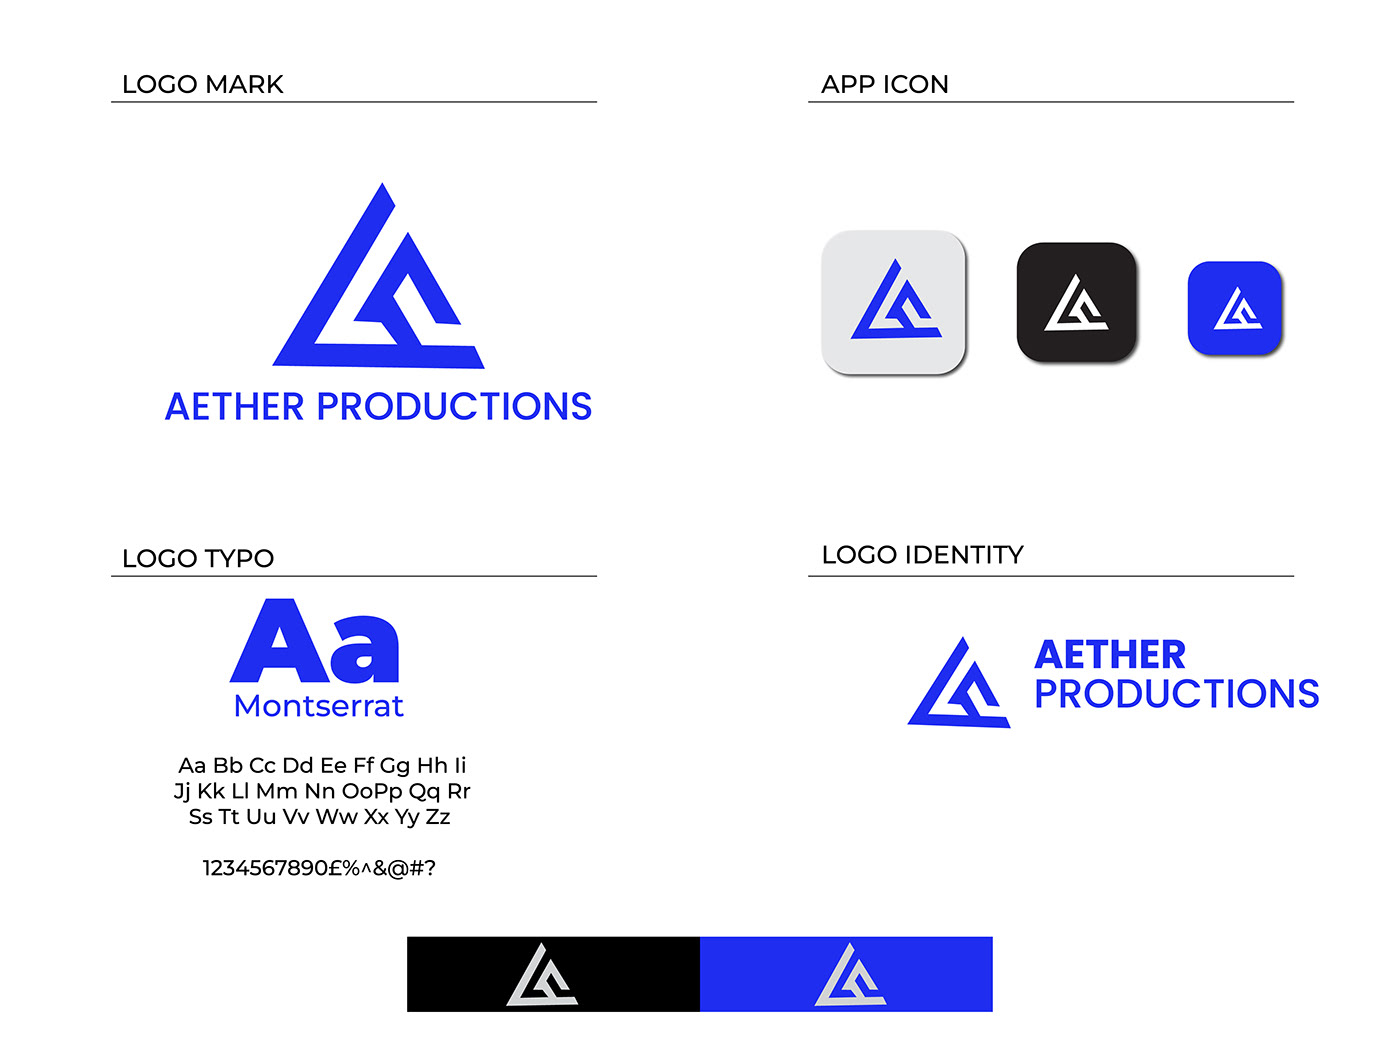 Logo Design brand identity visual Brand Design identity visual identity brand company logo design mockup design voctor